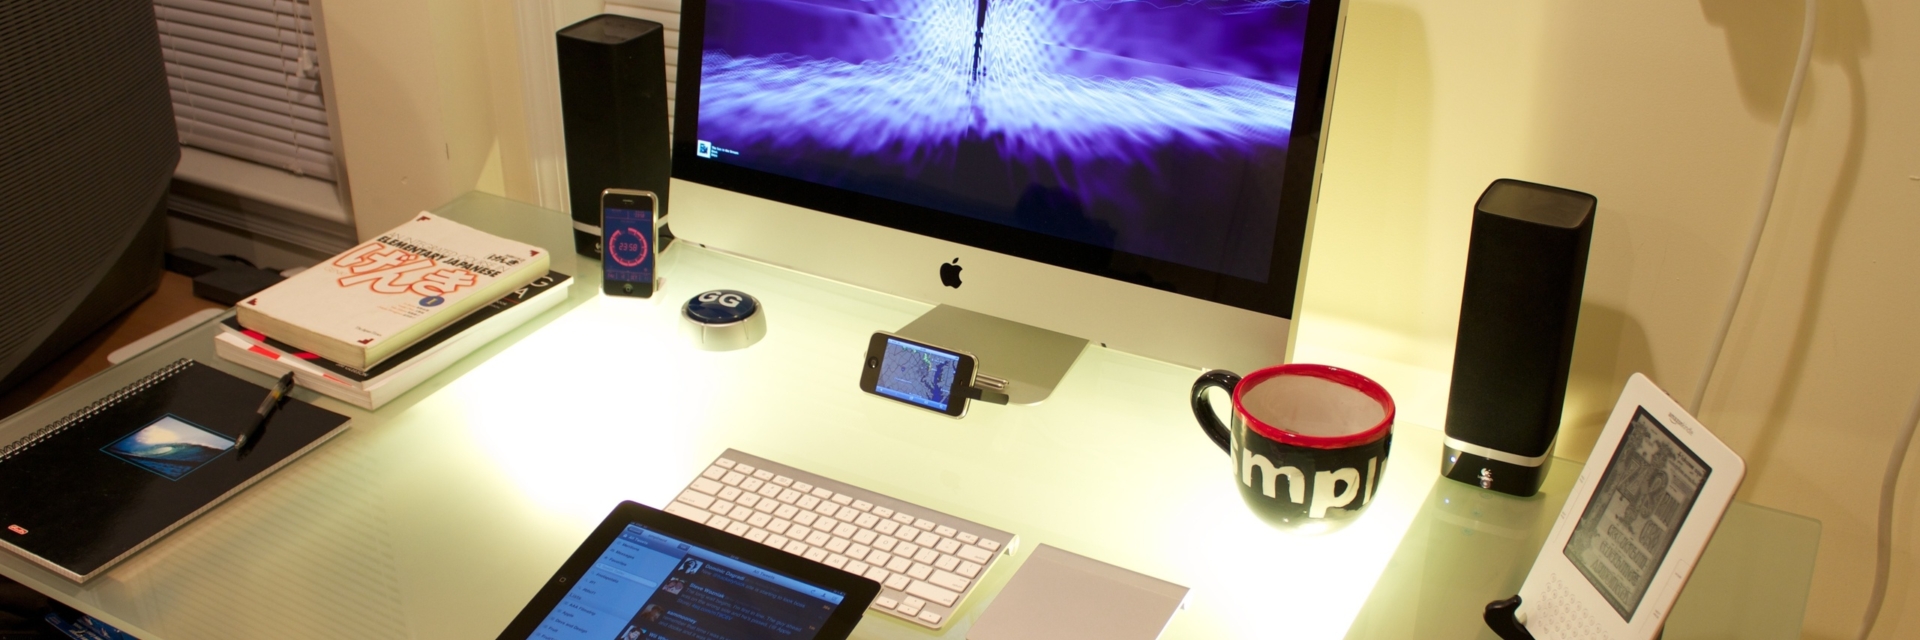 Мод убирающий тряску экрана. Компьютер 2015 года. Монитор на столе фото.